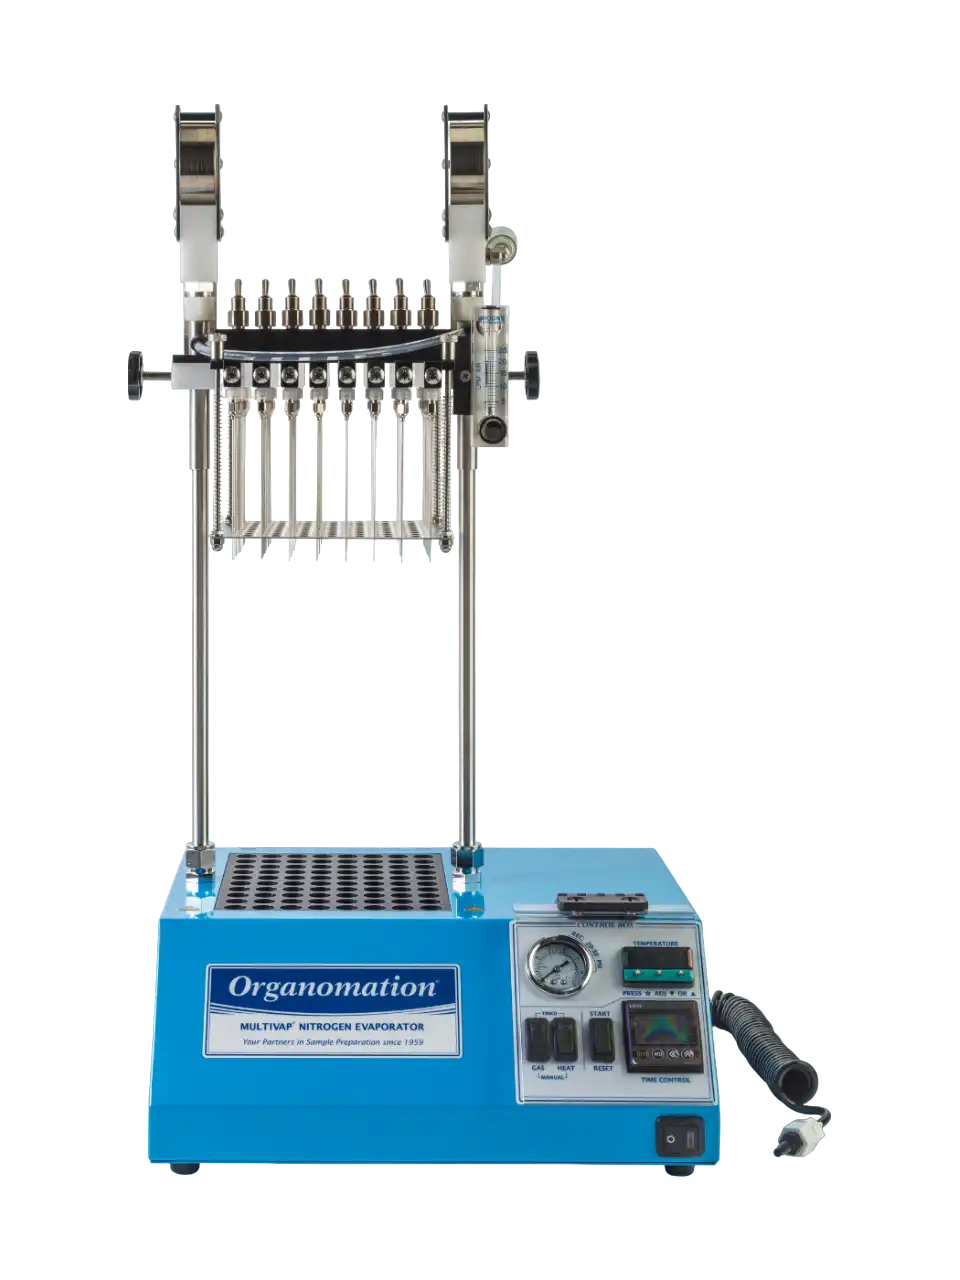 Nitrogen Evaporator, MULTIVAP Series, Standard, with Dry Block Heater (30-120°C and 900 W), Digital Control, 80 Sample Positions